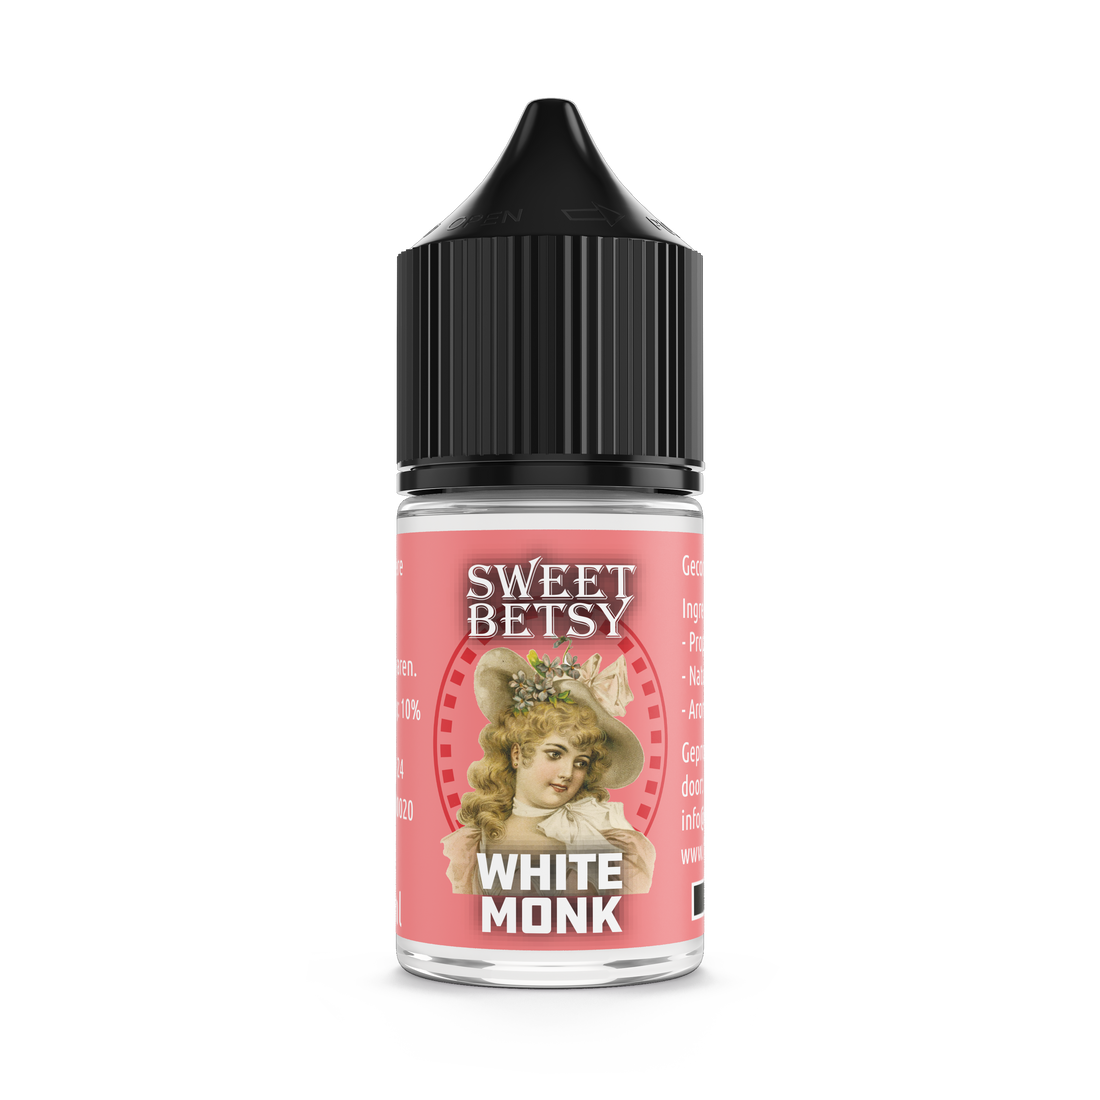 Sweet Betsy White Monk aroma - Flavormonks